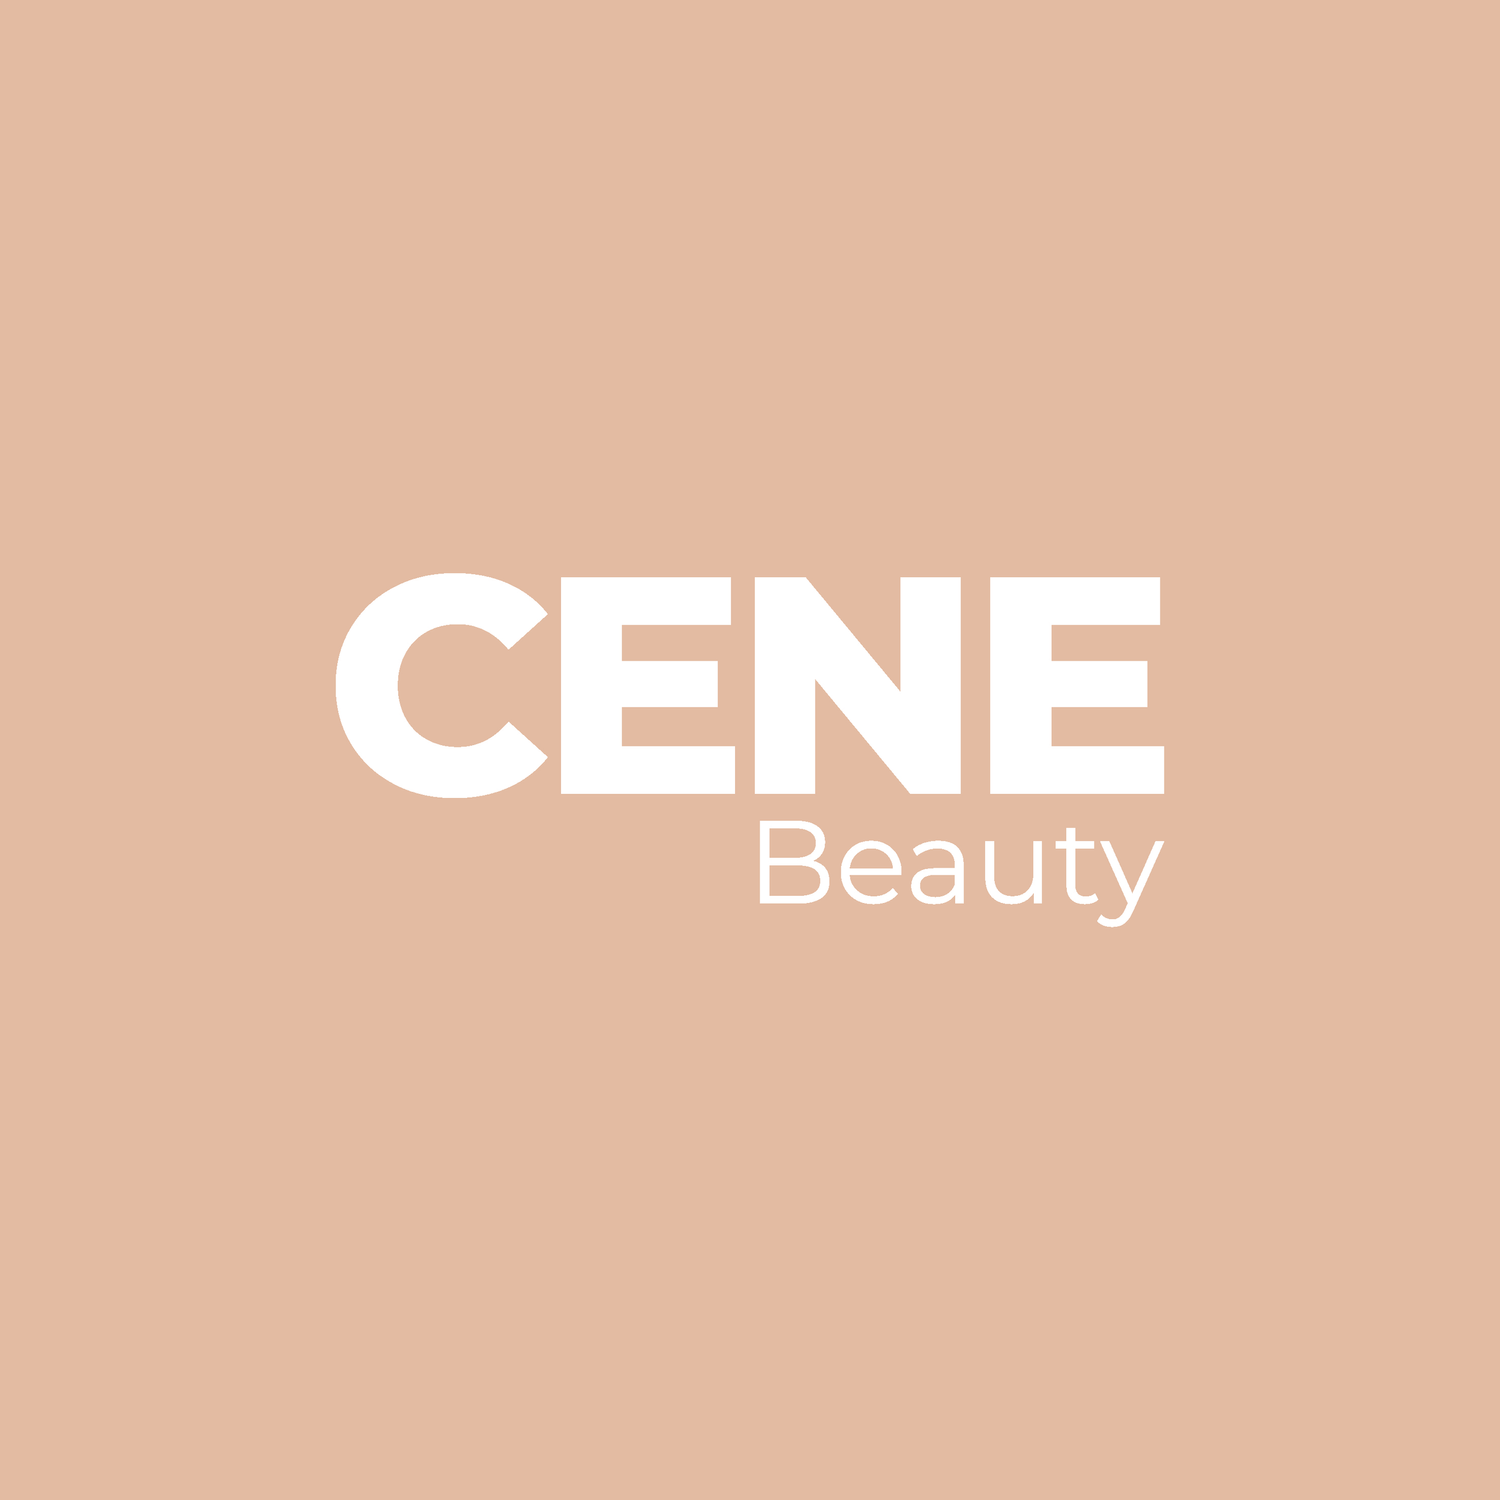 CENE BEAUTY LLC